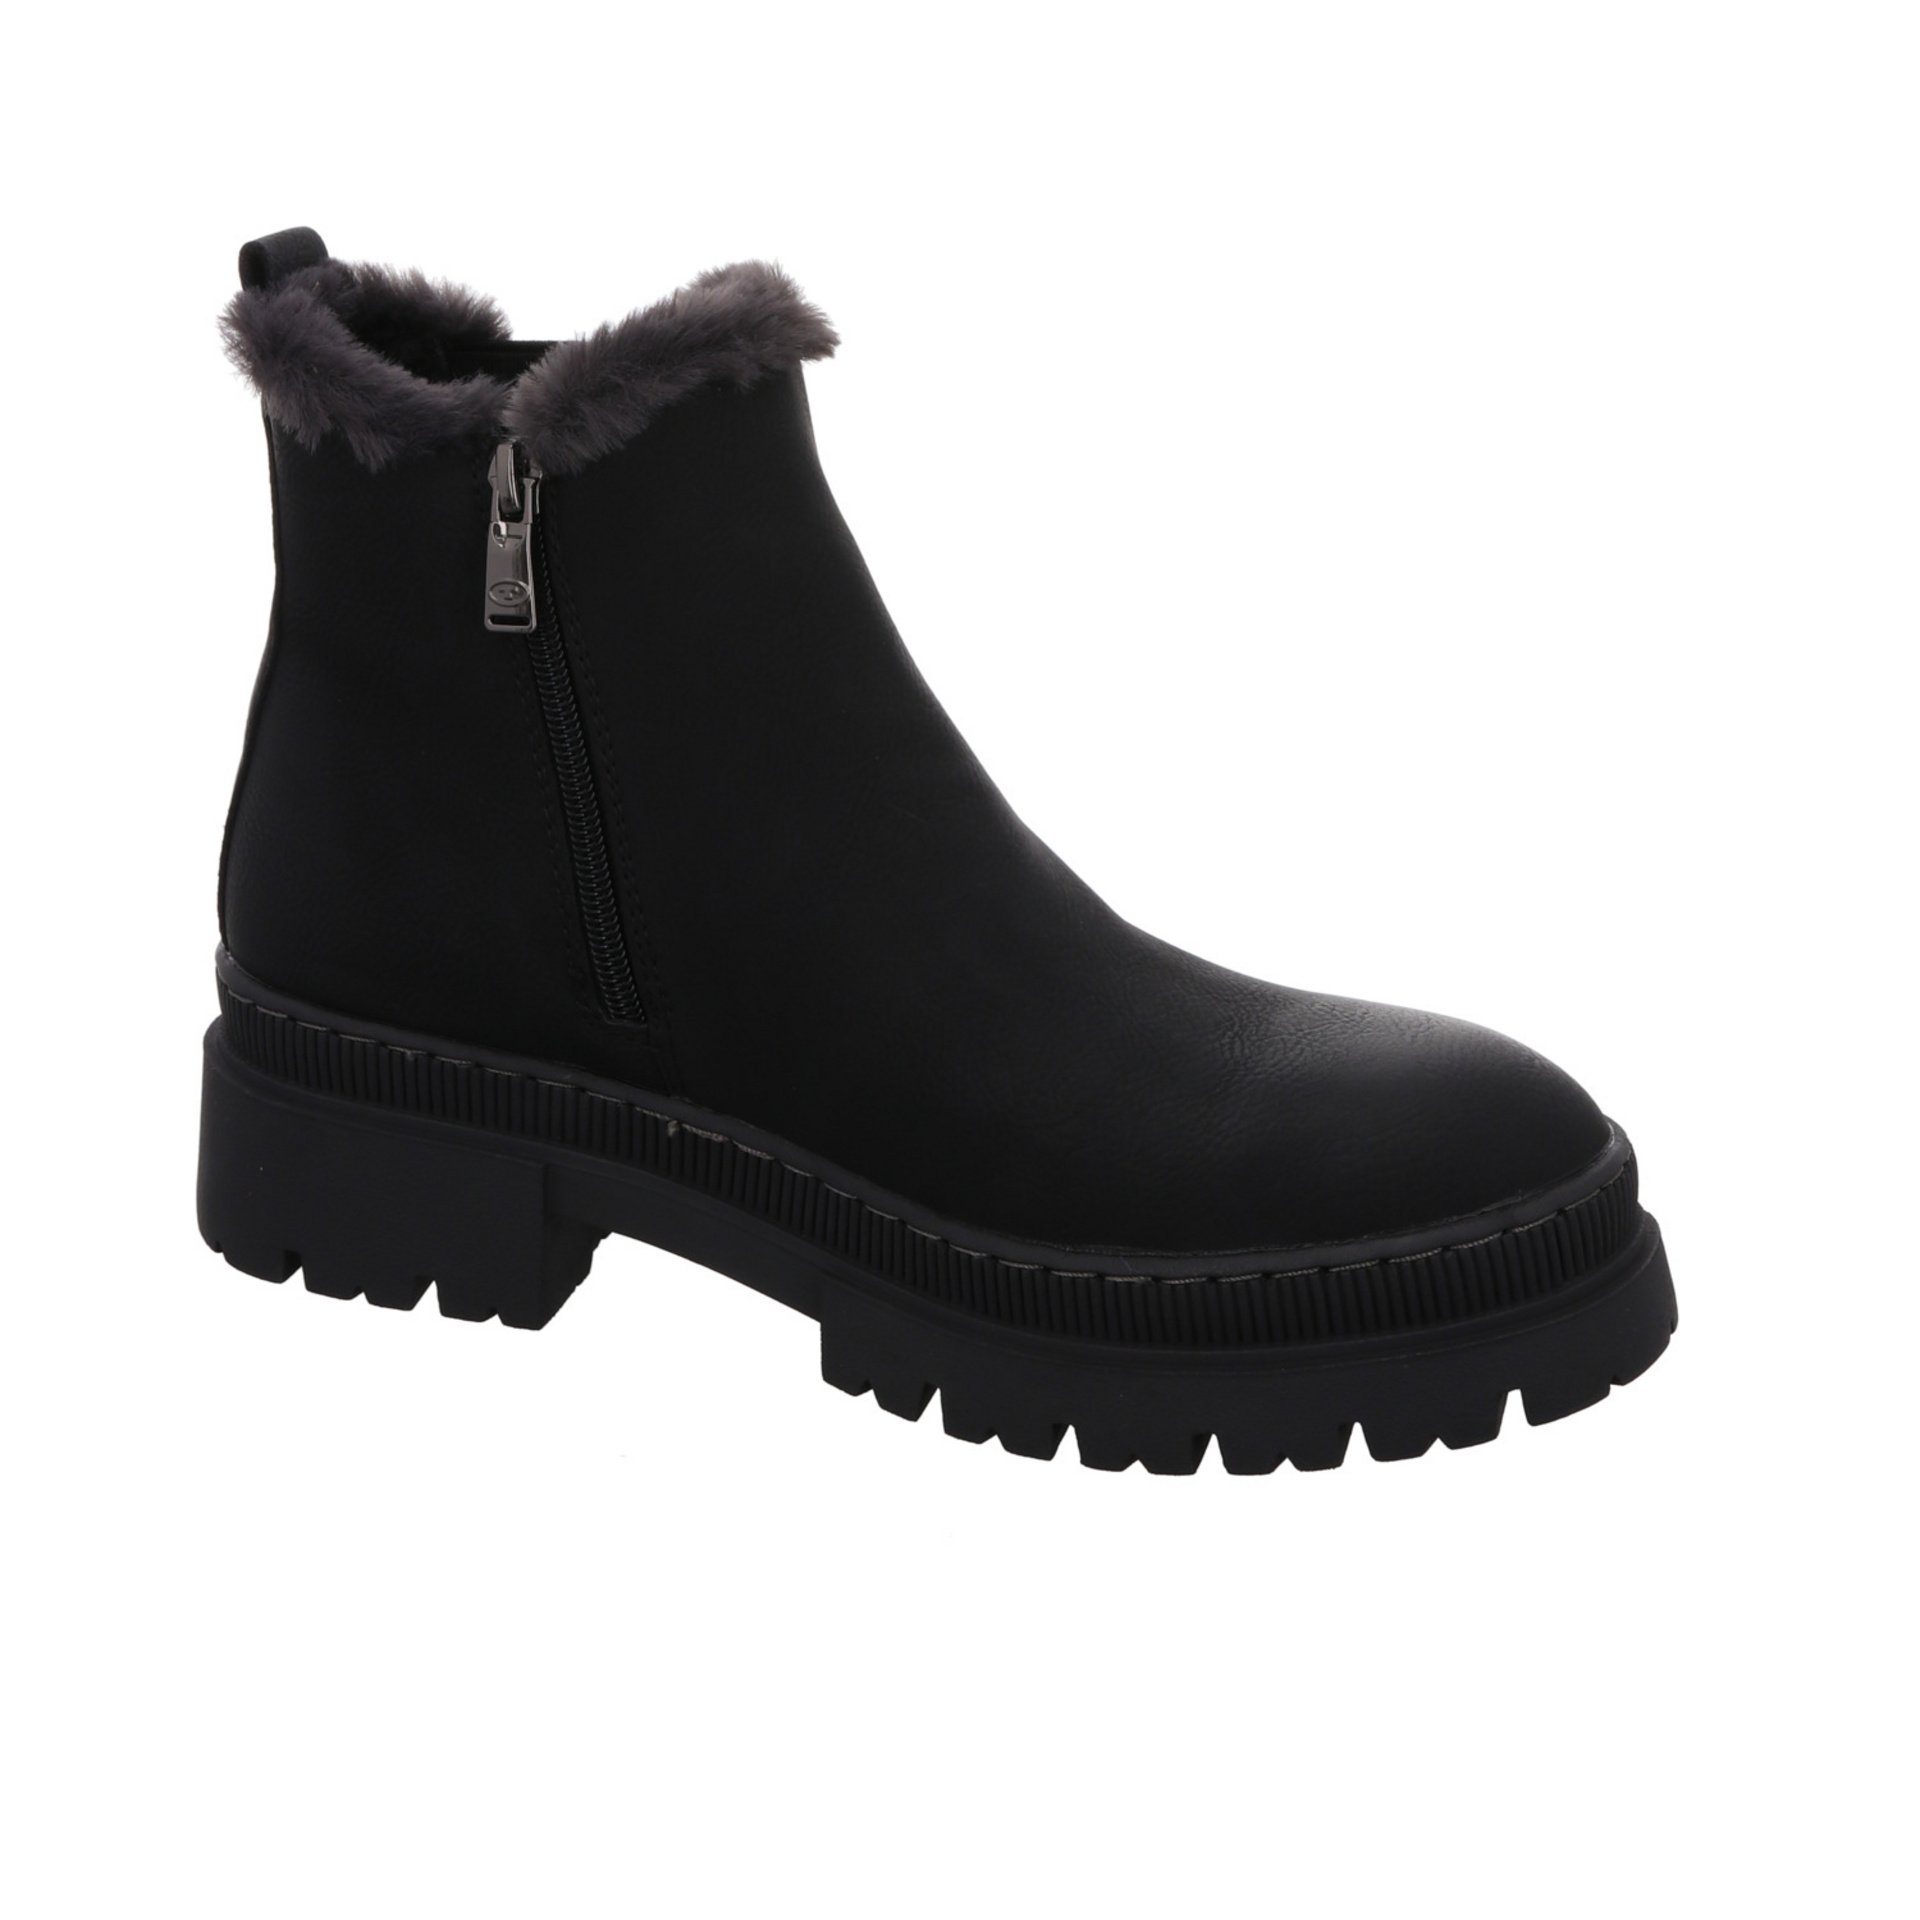 TAILOR Boots Stiefel black Chelsea Schuhe Synthetik Stiefel TOM Damen